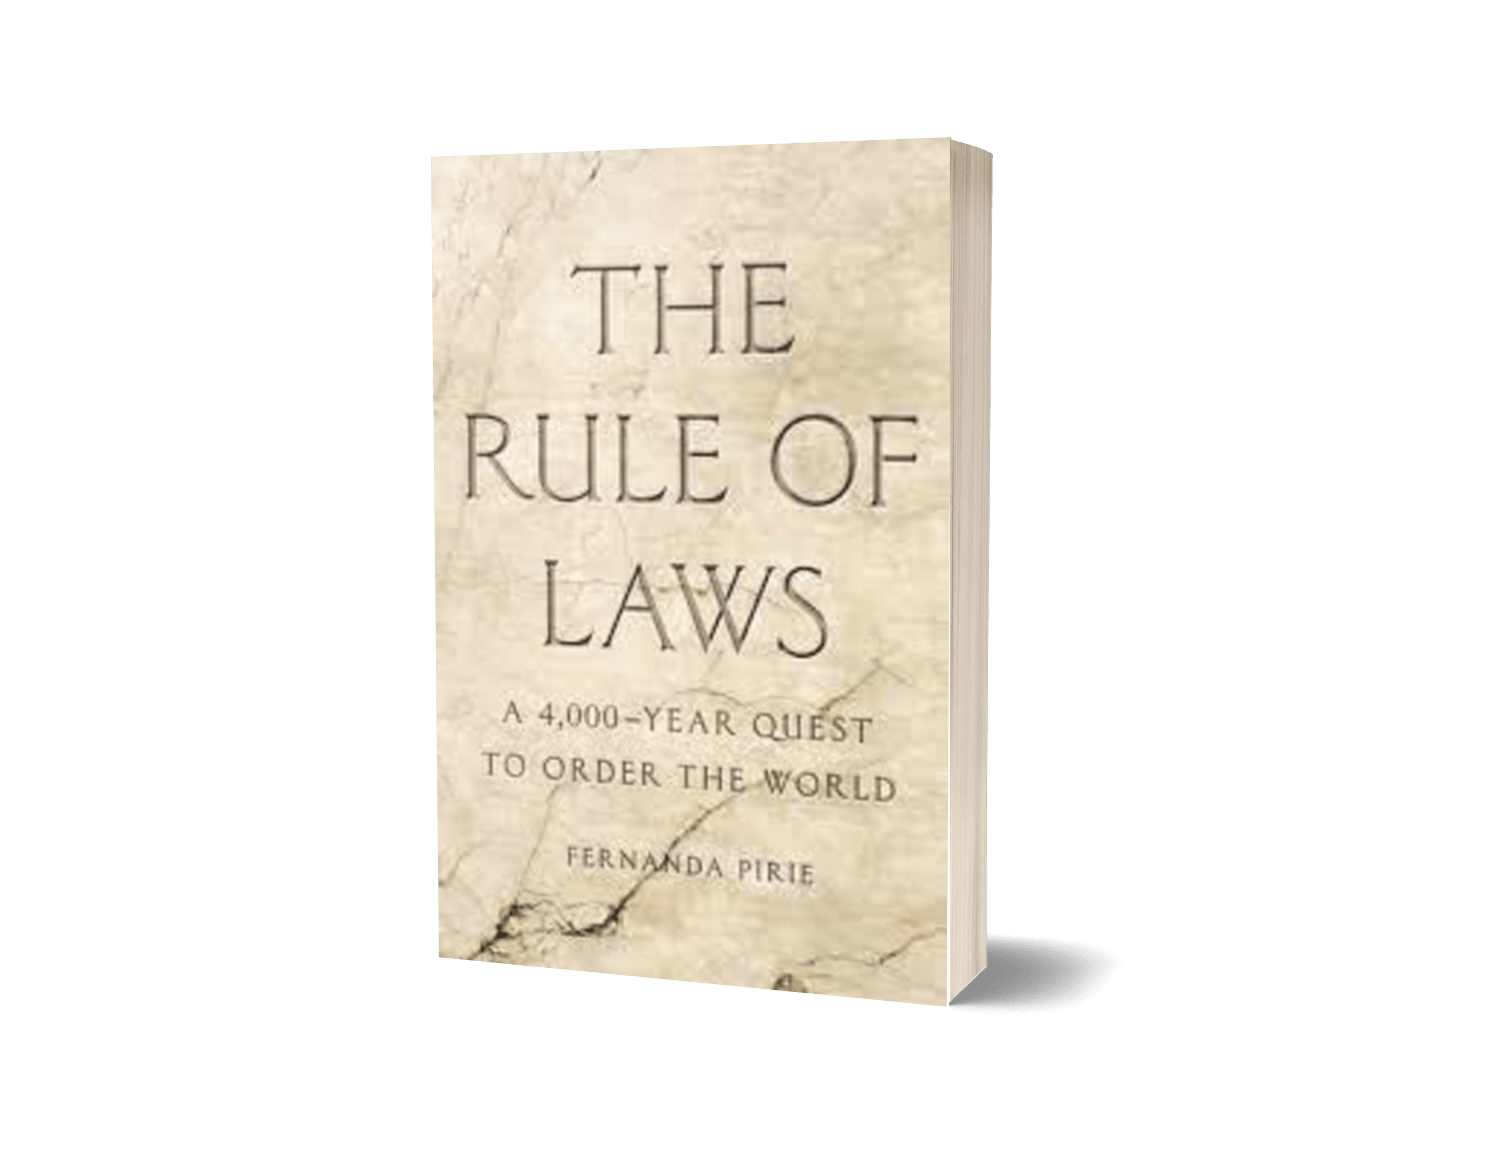 The Rule of Laws by Fernanda Pirie